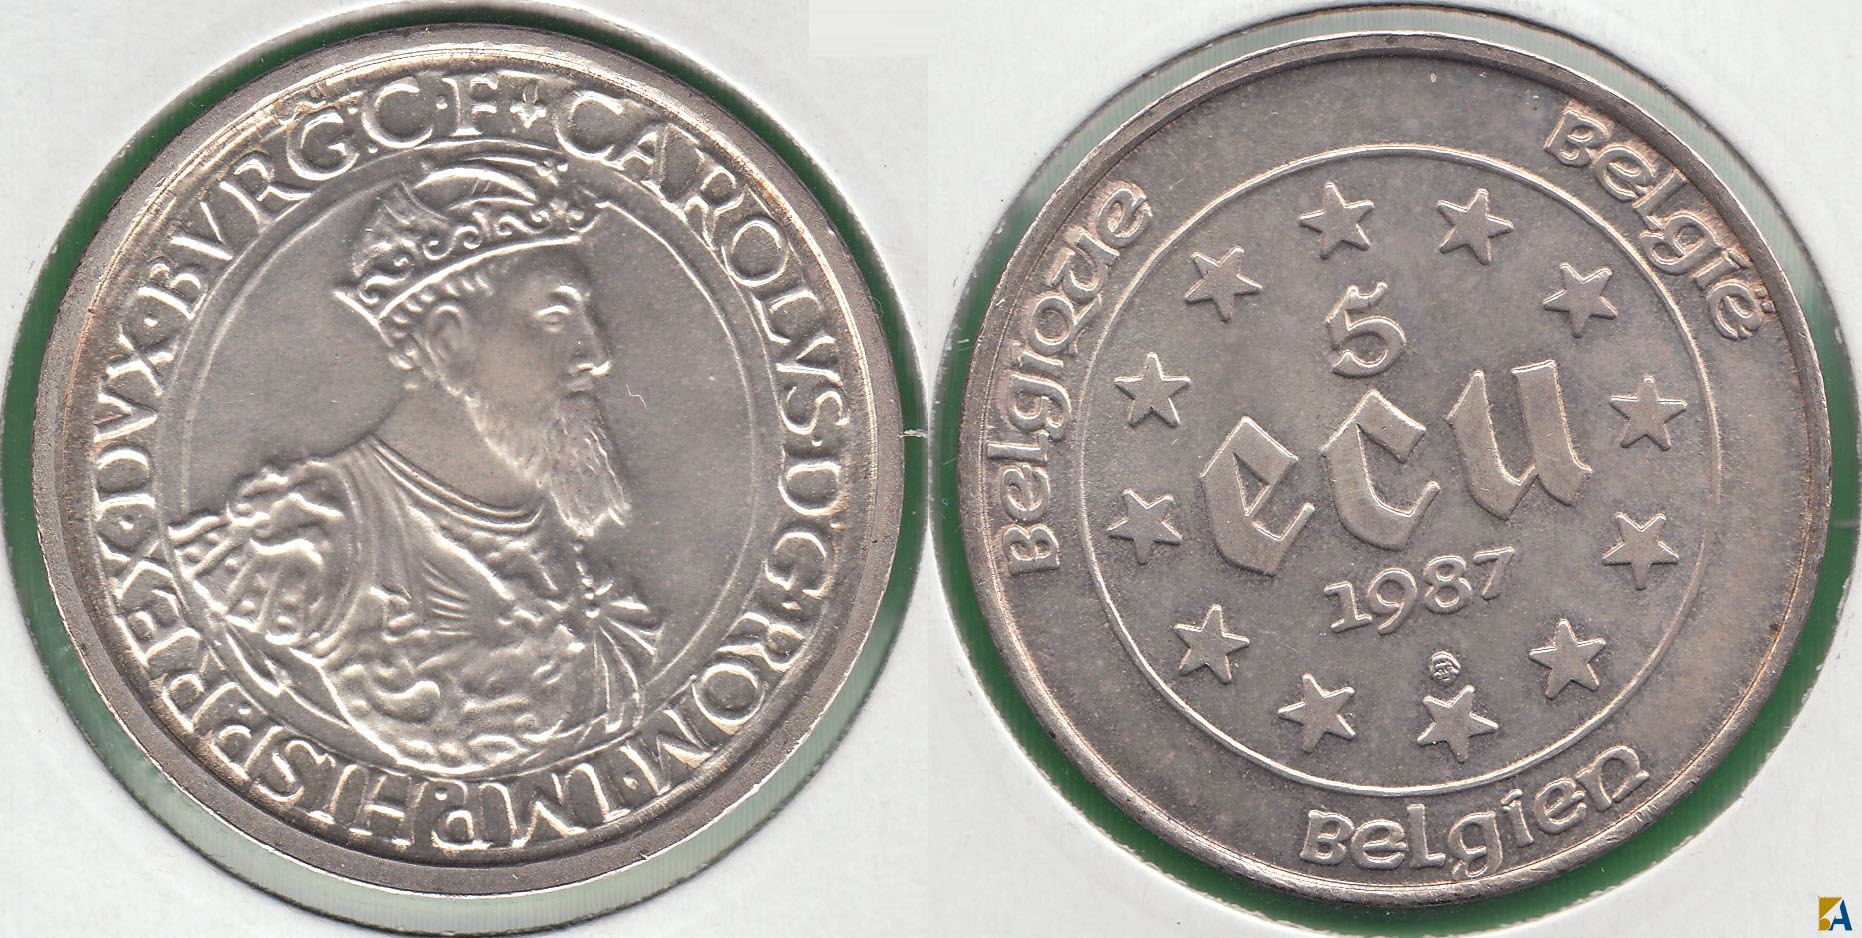 BELGICA - BELGIUM. 5 ECU DE 1987. PLATA 0.835.